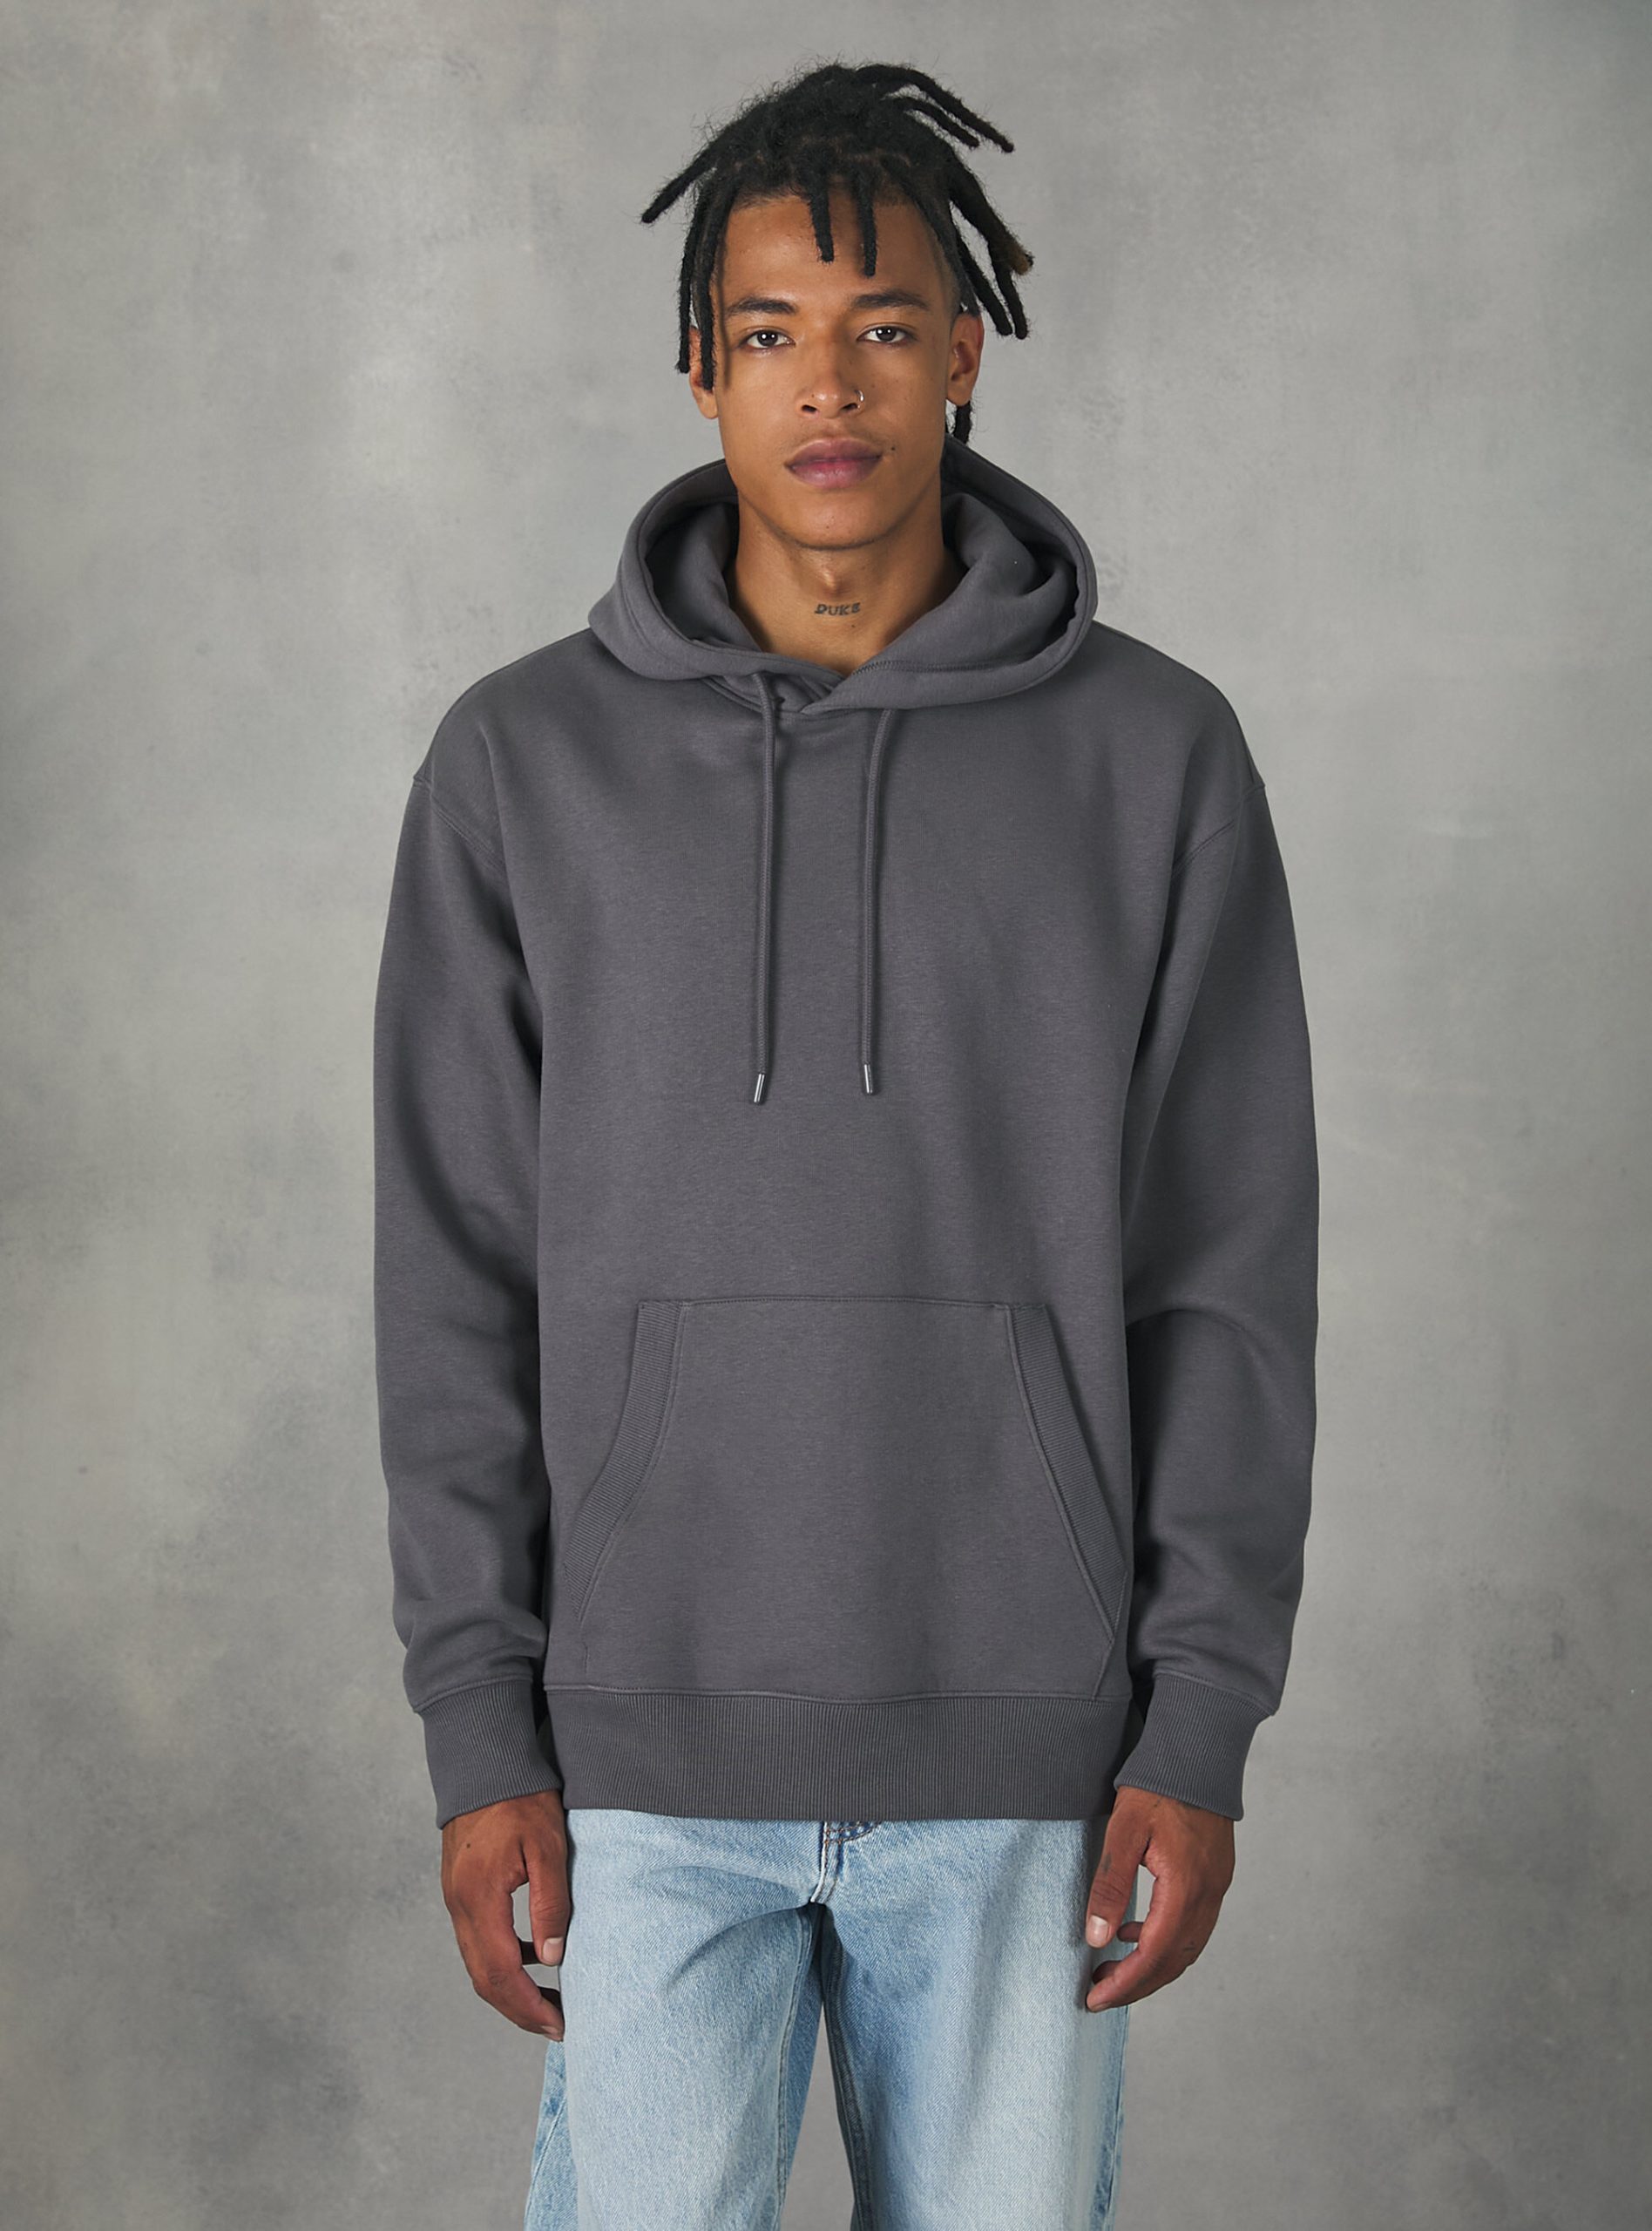 Alcott Männer Sweatshirts Marke Gy1 Grey Dark Sweatshirt With Hood And Pouch Pocket – 2